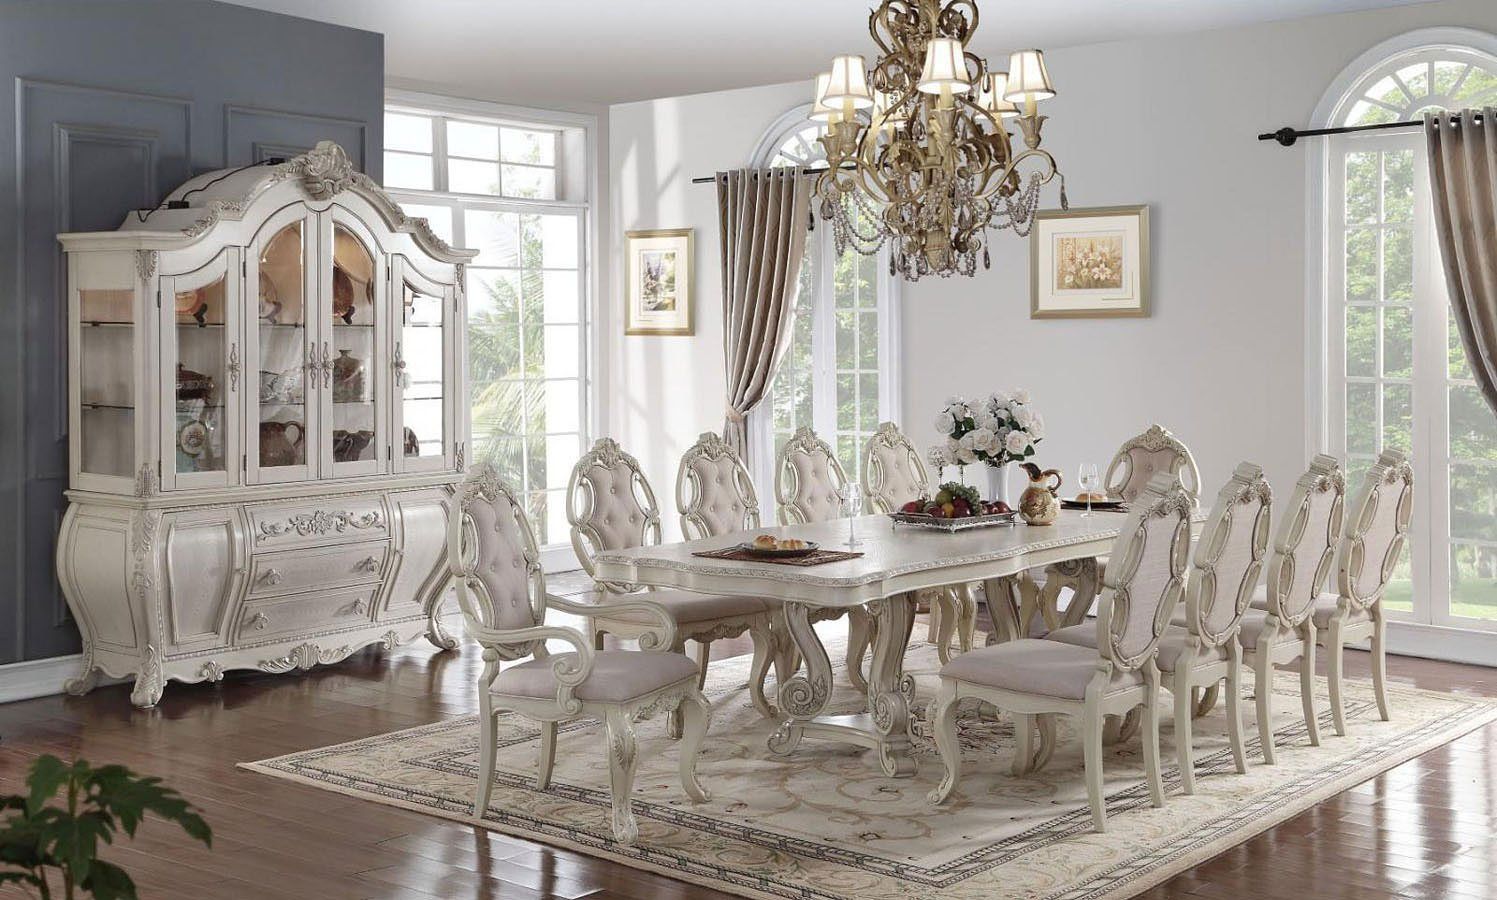 Chelmsford Fireplace Best Of Ragenardus Dining Room Set Antique White